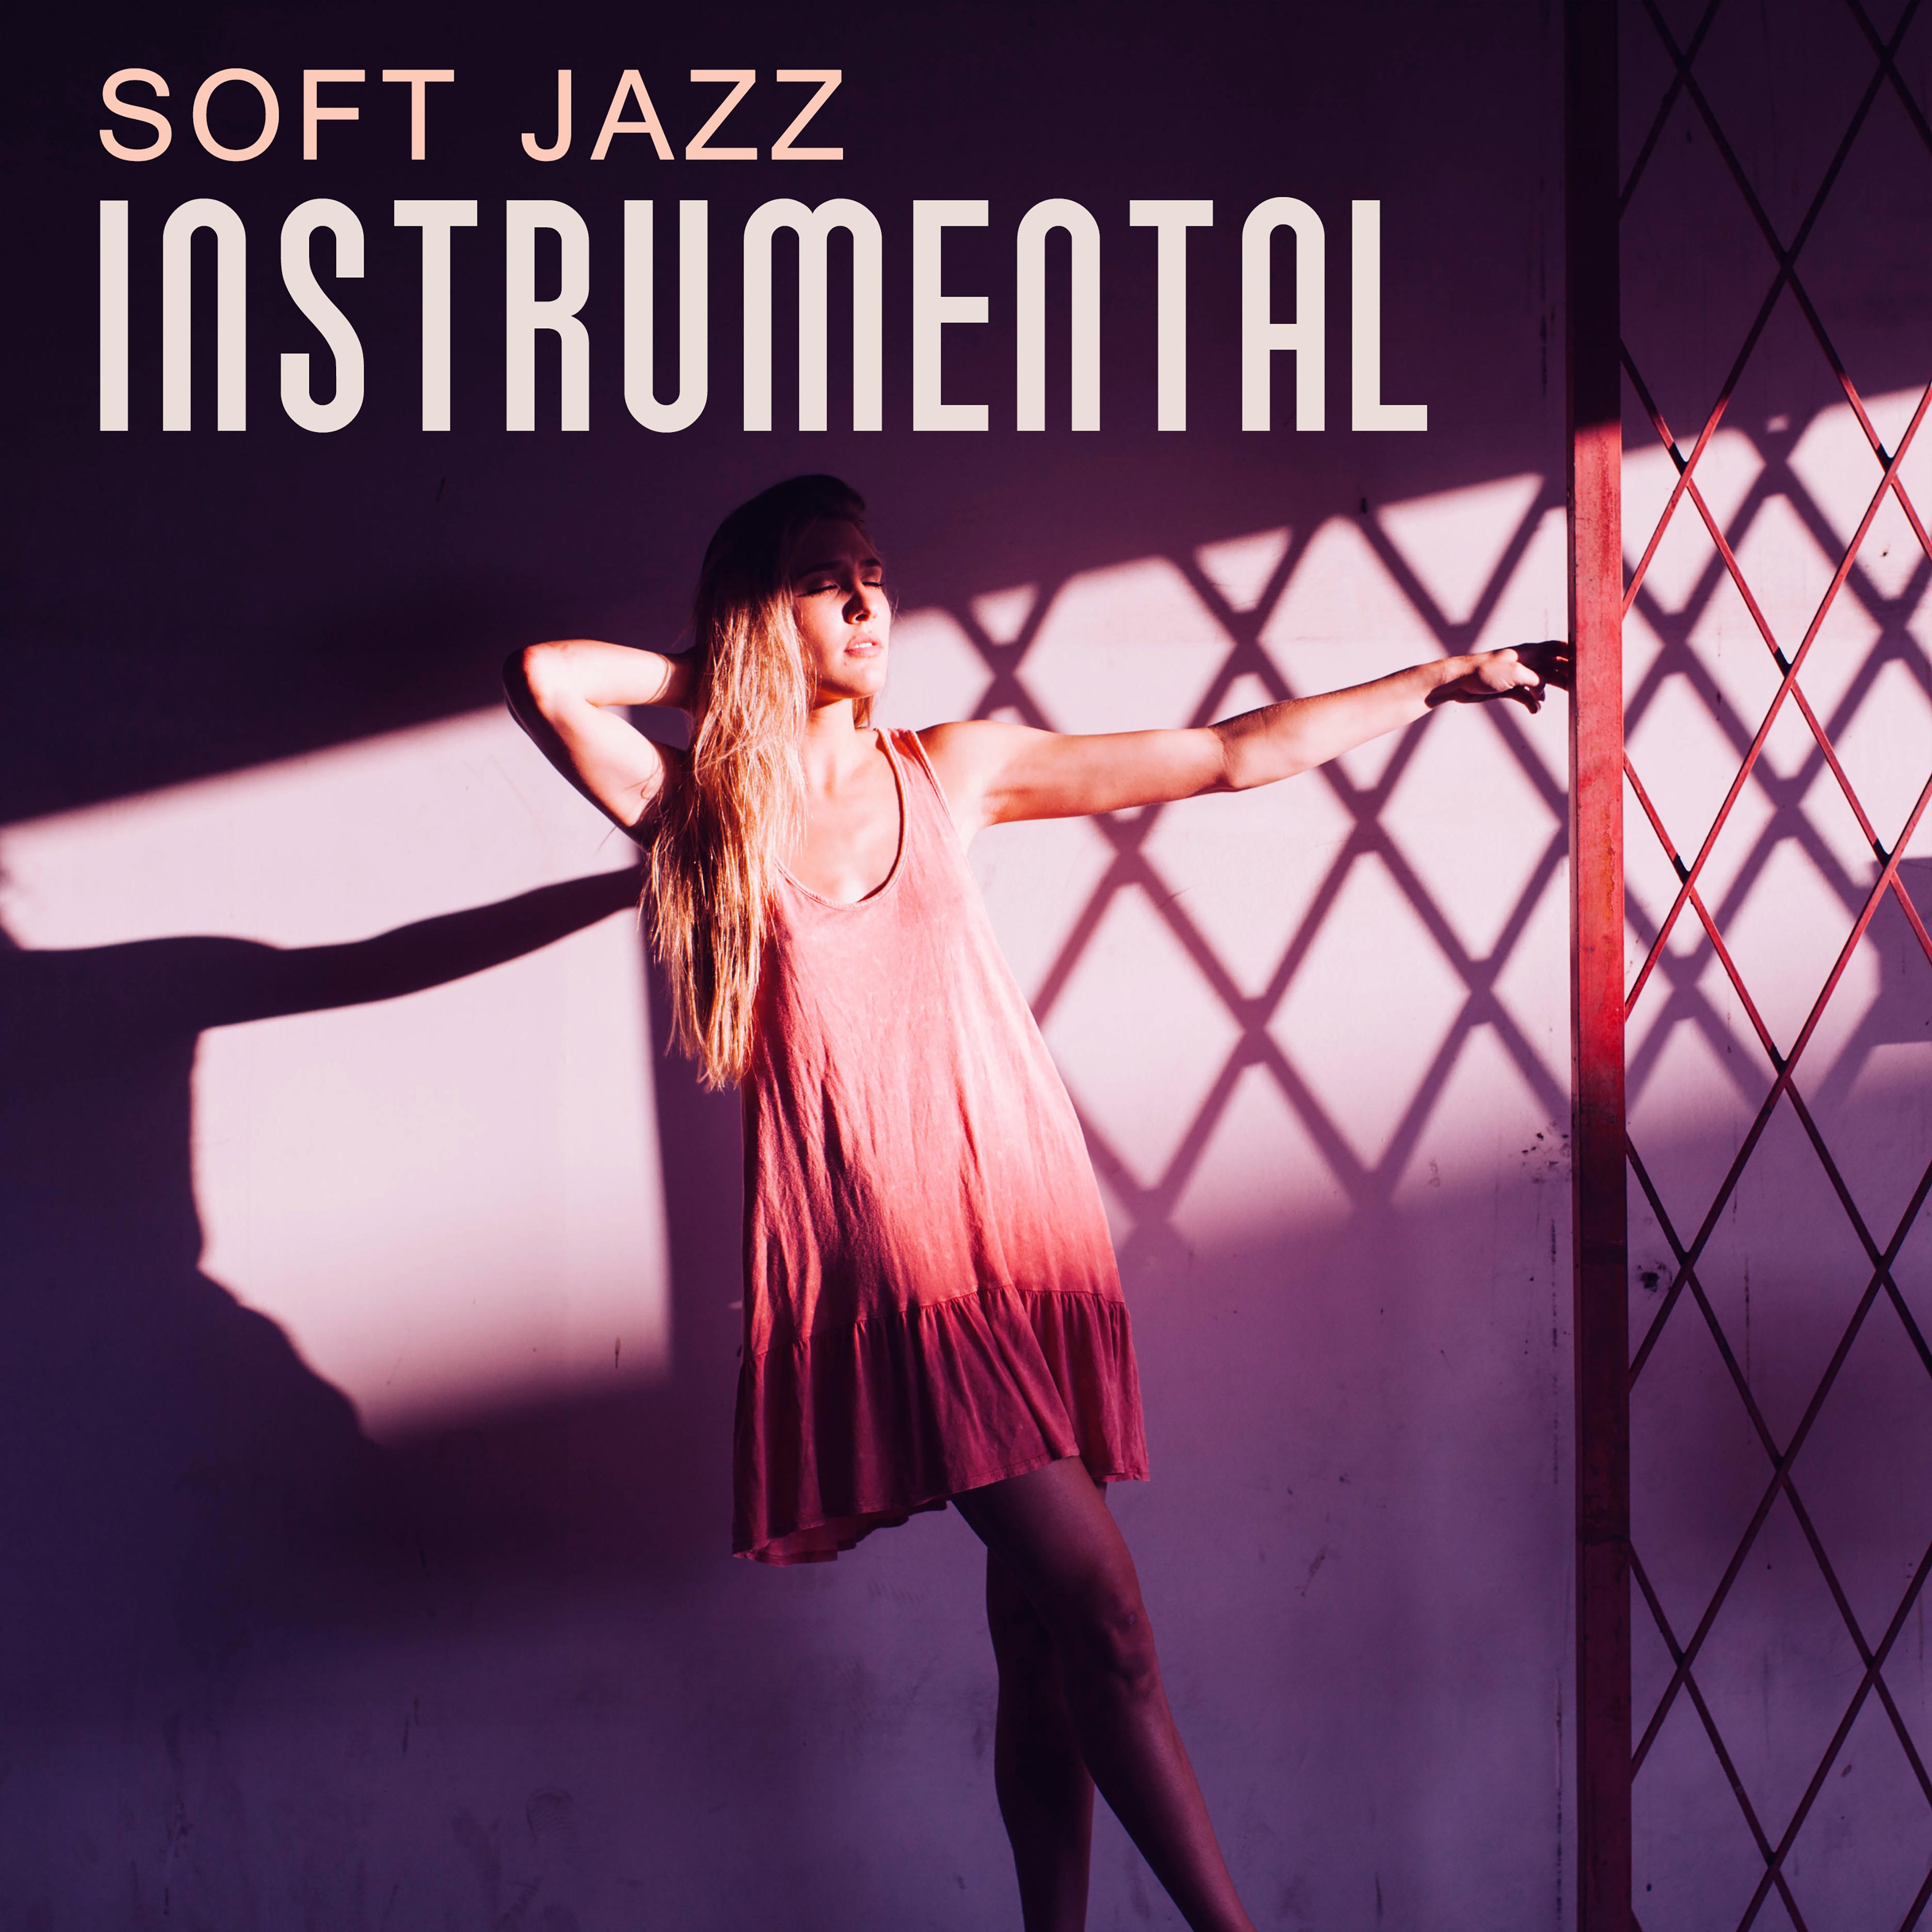 Soft Jazz Instrumental – Calming Jazz, Instrumental Music, Piano and Guitar, Ambient Jazz Music, Relaxing Jazz